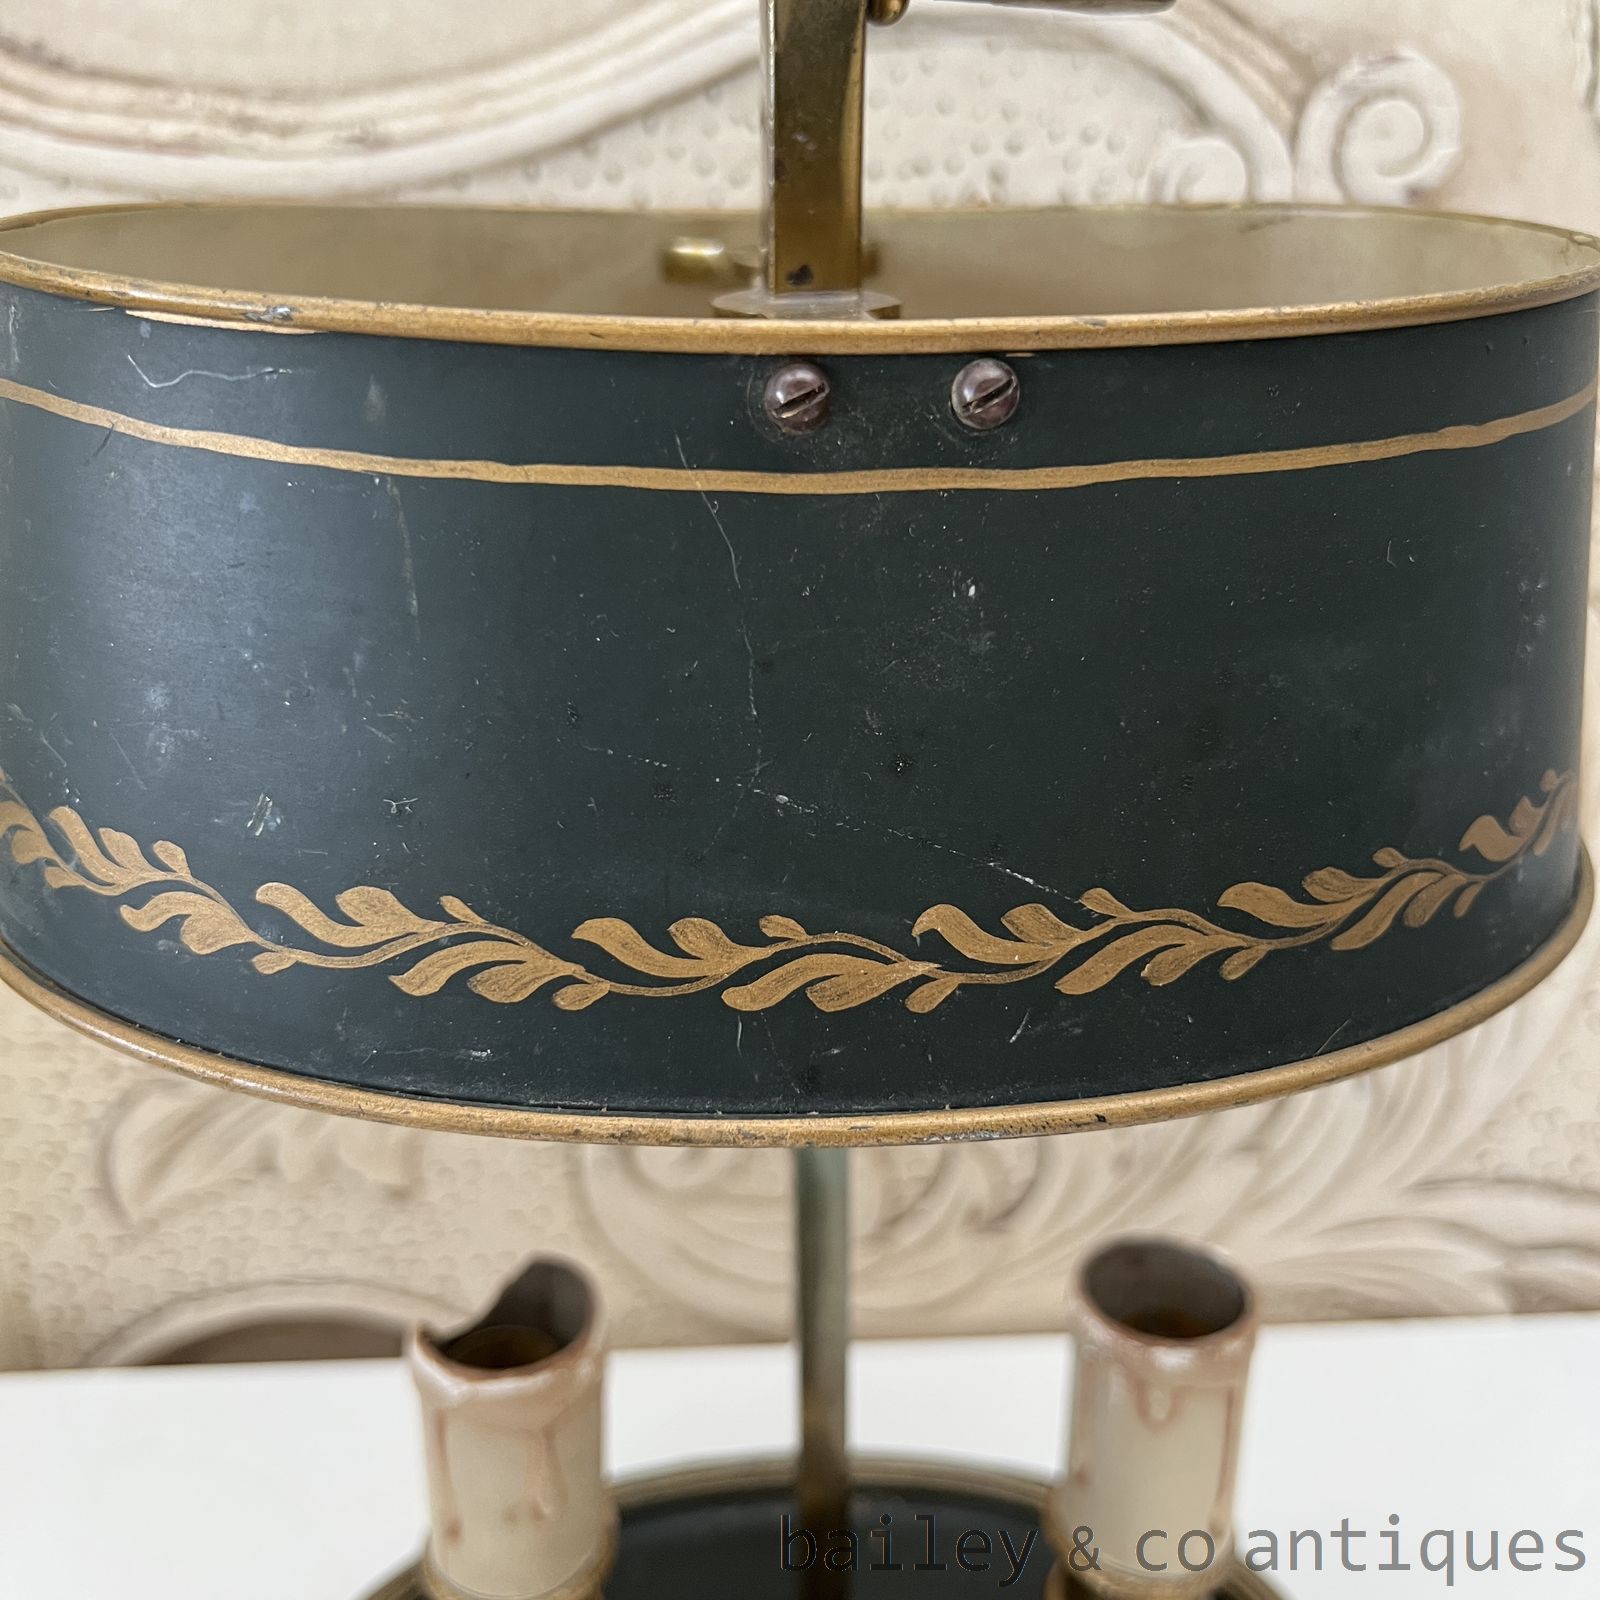 Vintage French Bouillotte Parisian Salon Lamps x2 selling as pair  - FR690-703  detail 08